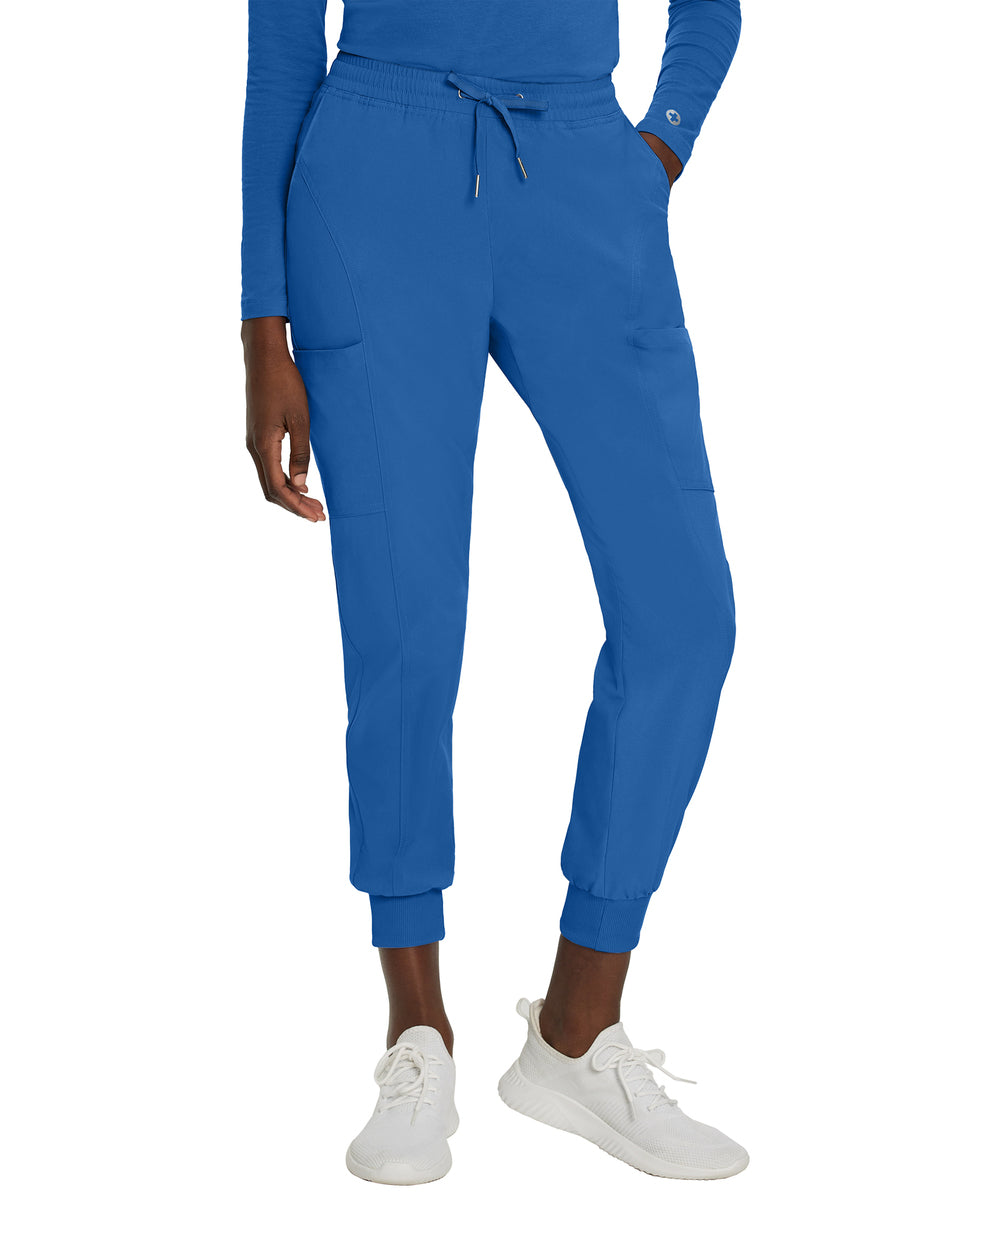 Women's jogger pants - FIT - 365T tall